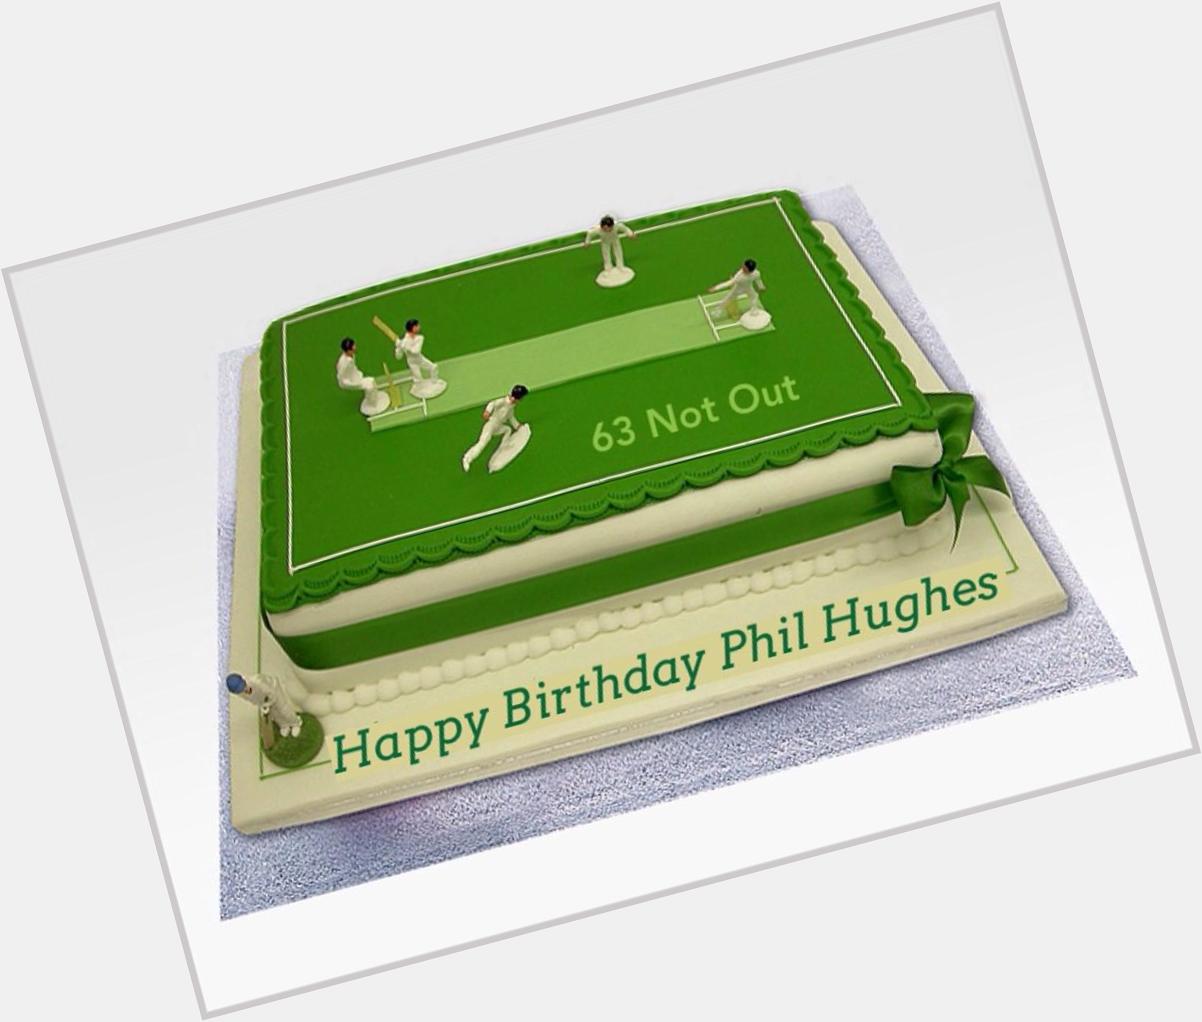   ....Happy Birthday Phillip. Hughes ...raise your glasses 